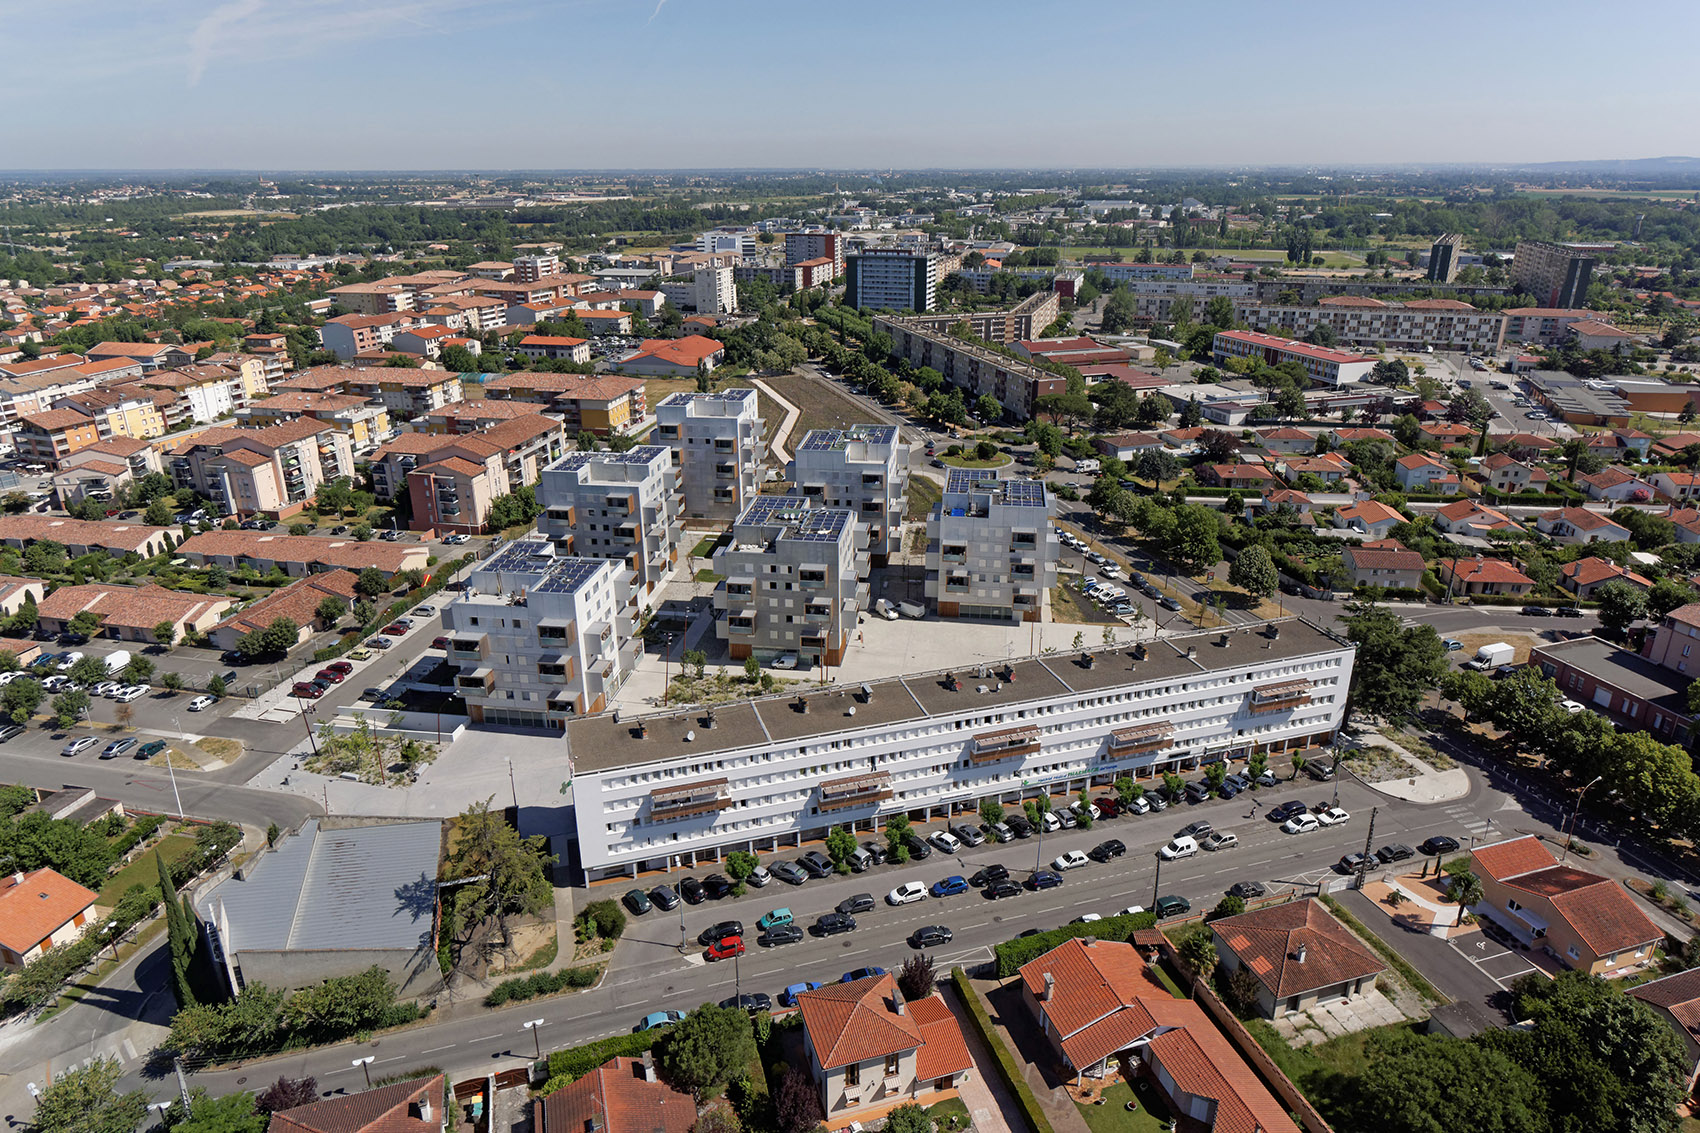 Square Maïmat住宅区更新，法国/释放公共空间，连接社区居民-55